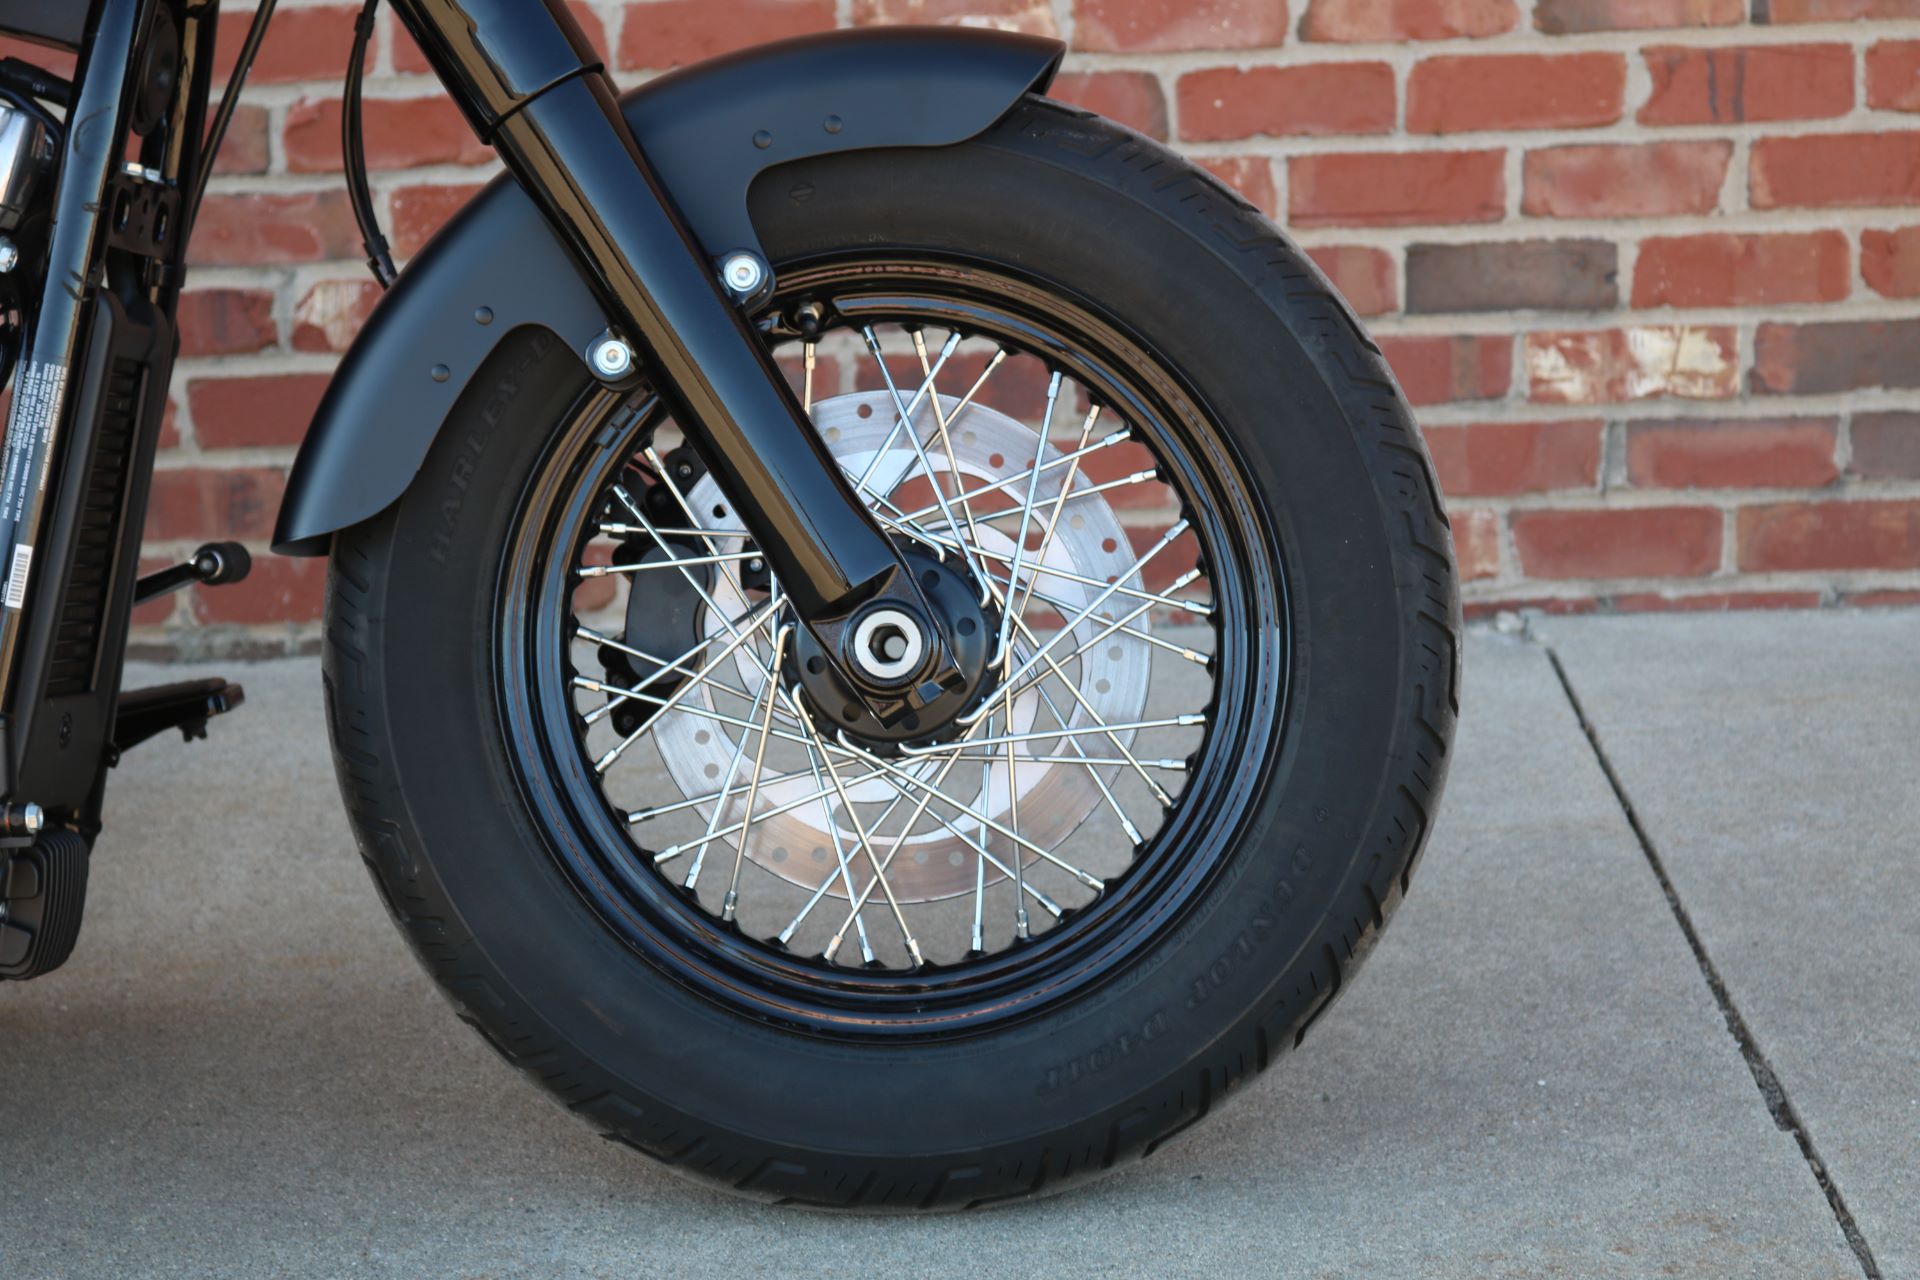 2020 Harley-Davidson Softail Slim® in Ames, Iowa - Photo 5